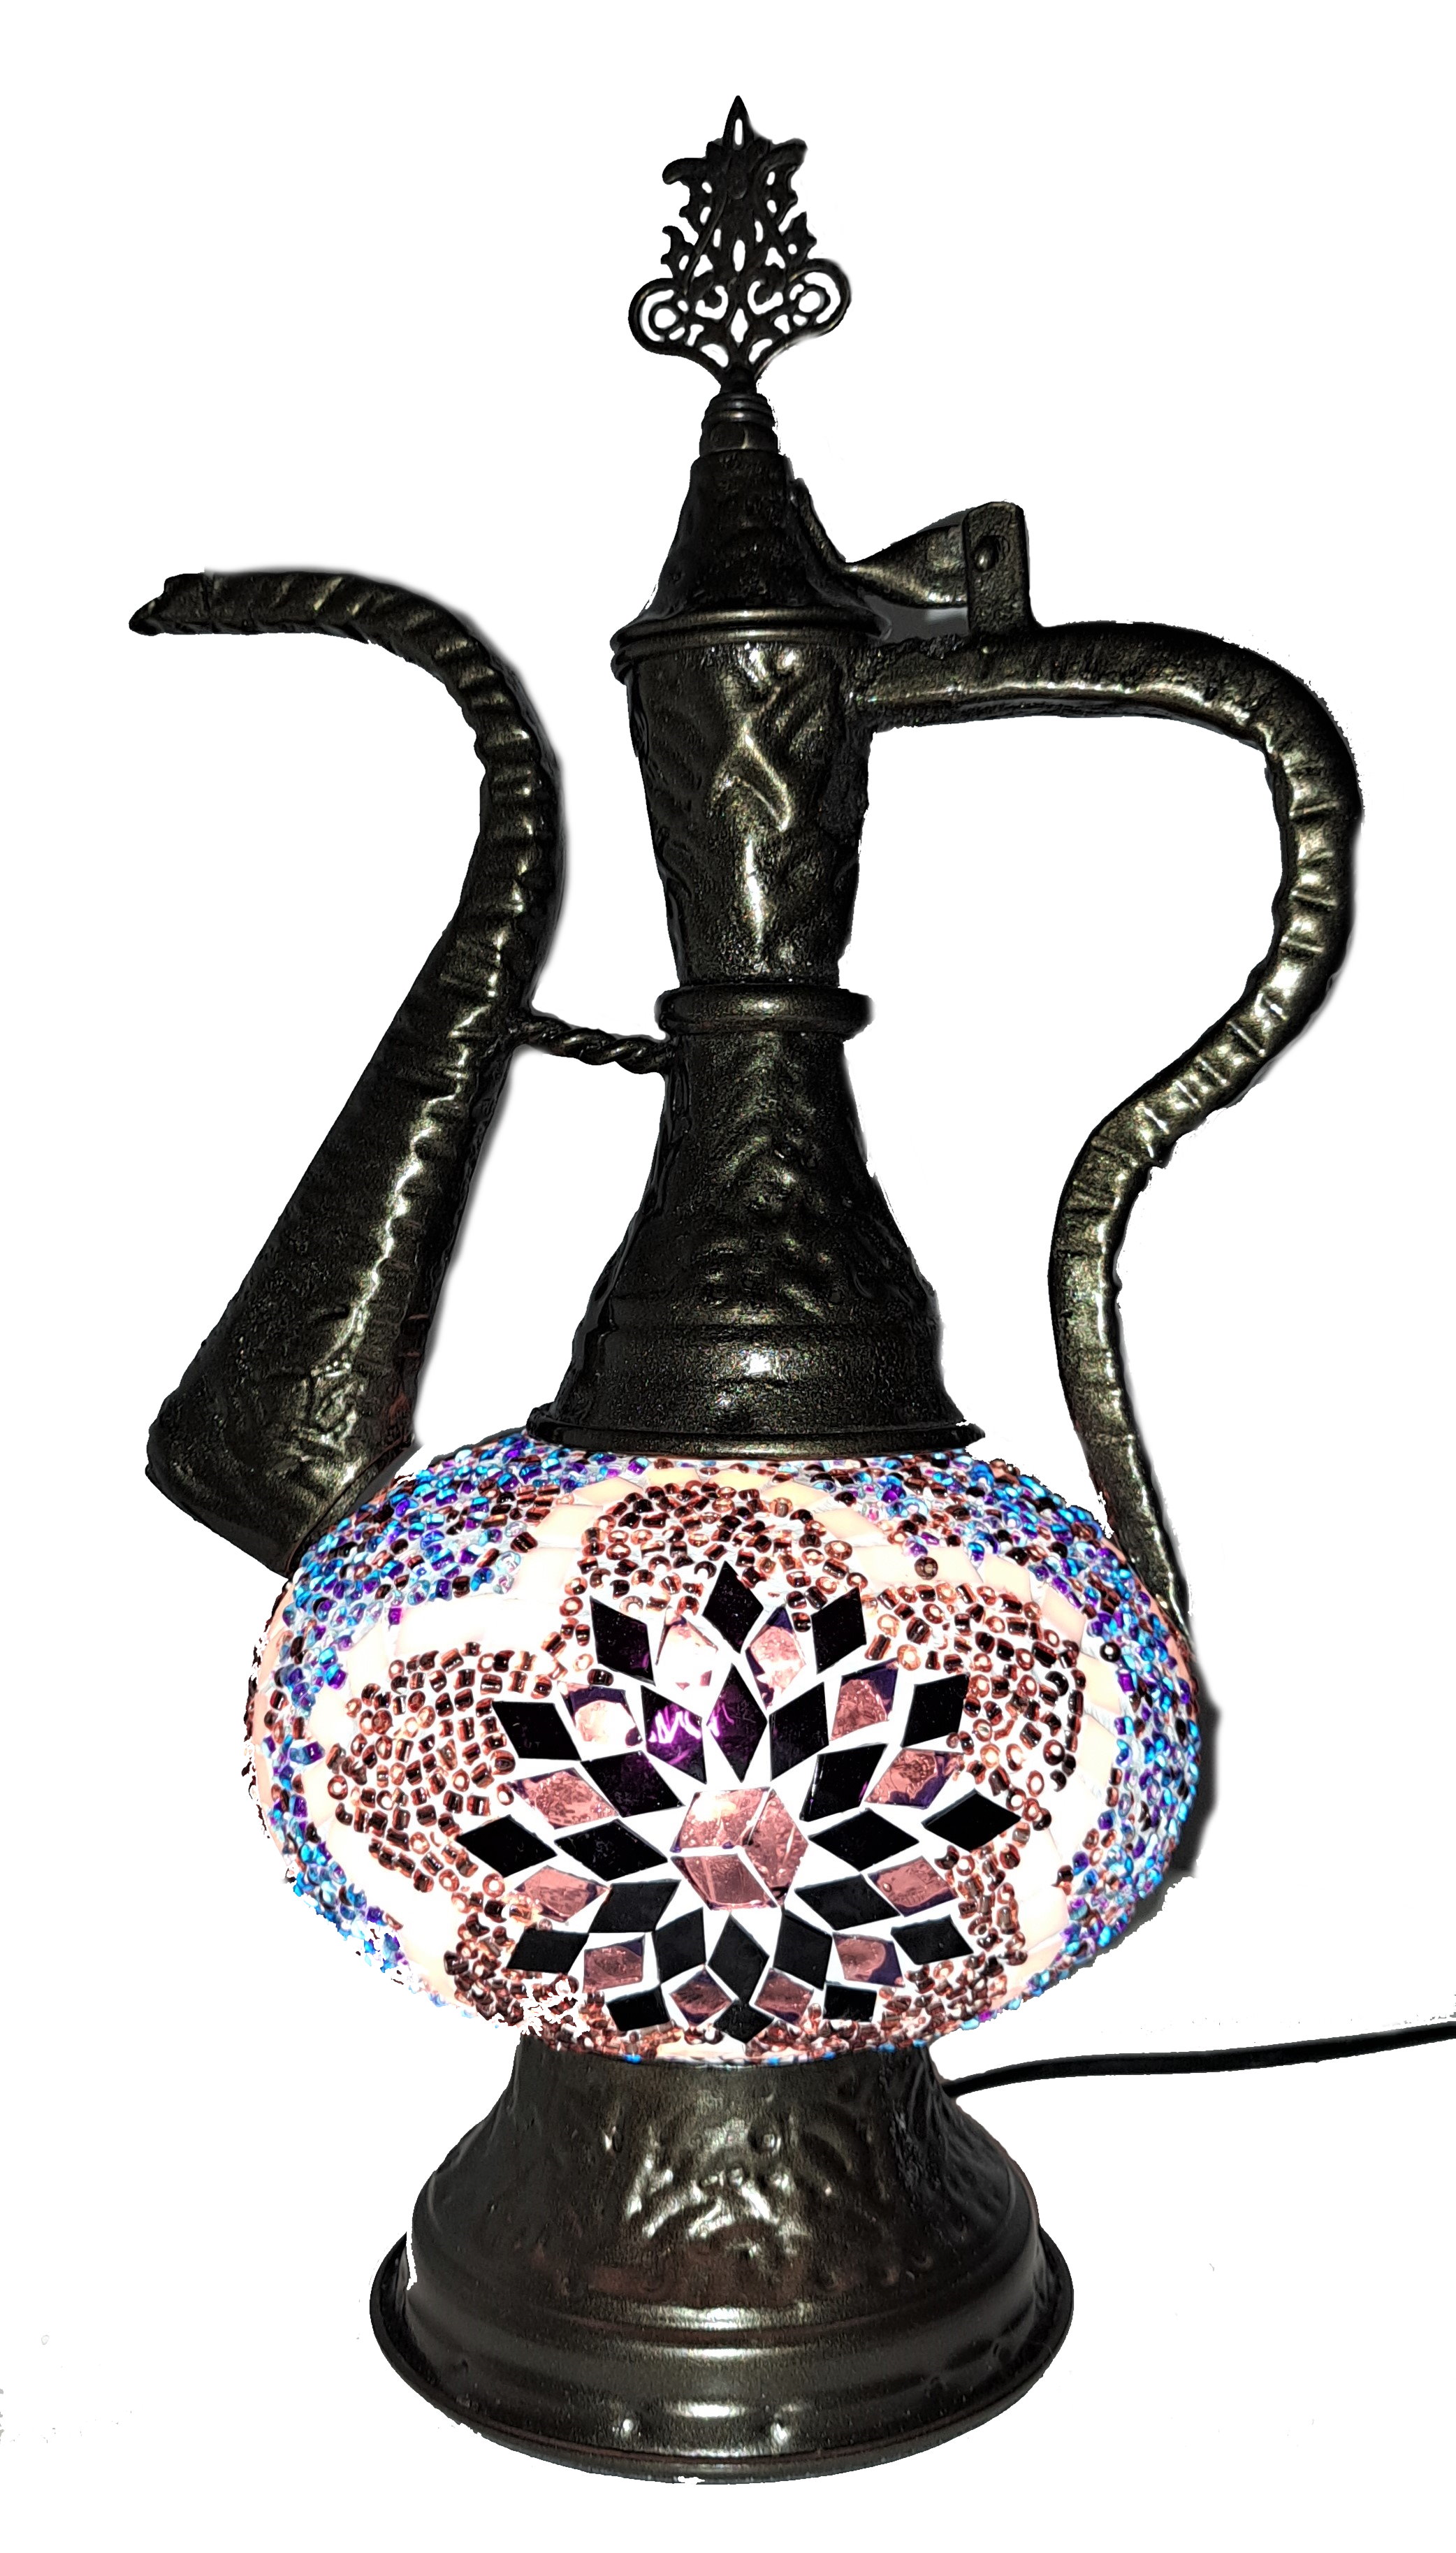 Lampa Ewer turceasca mozaic handmade